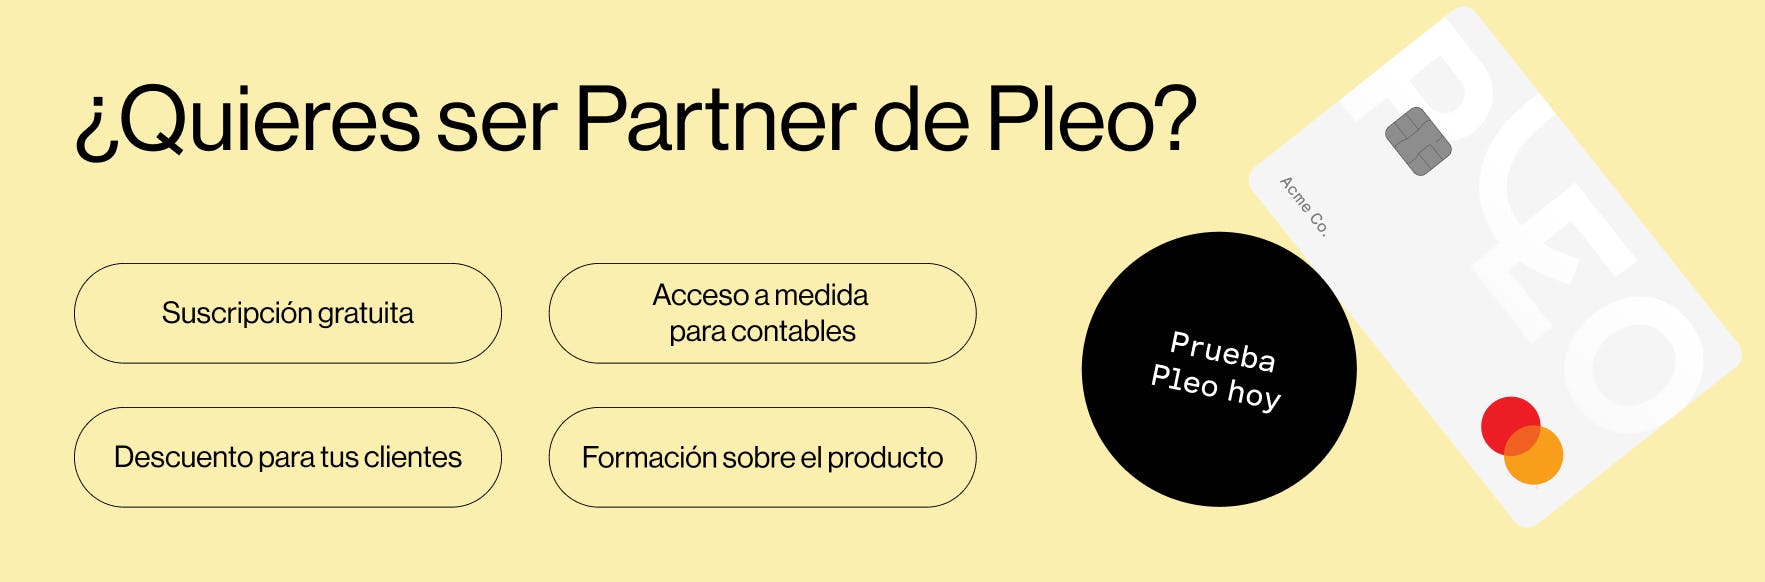 ¿Quieres ser Partner de Pleo?